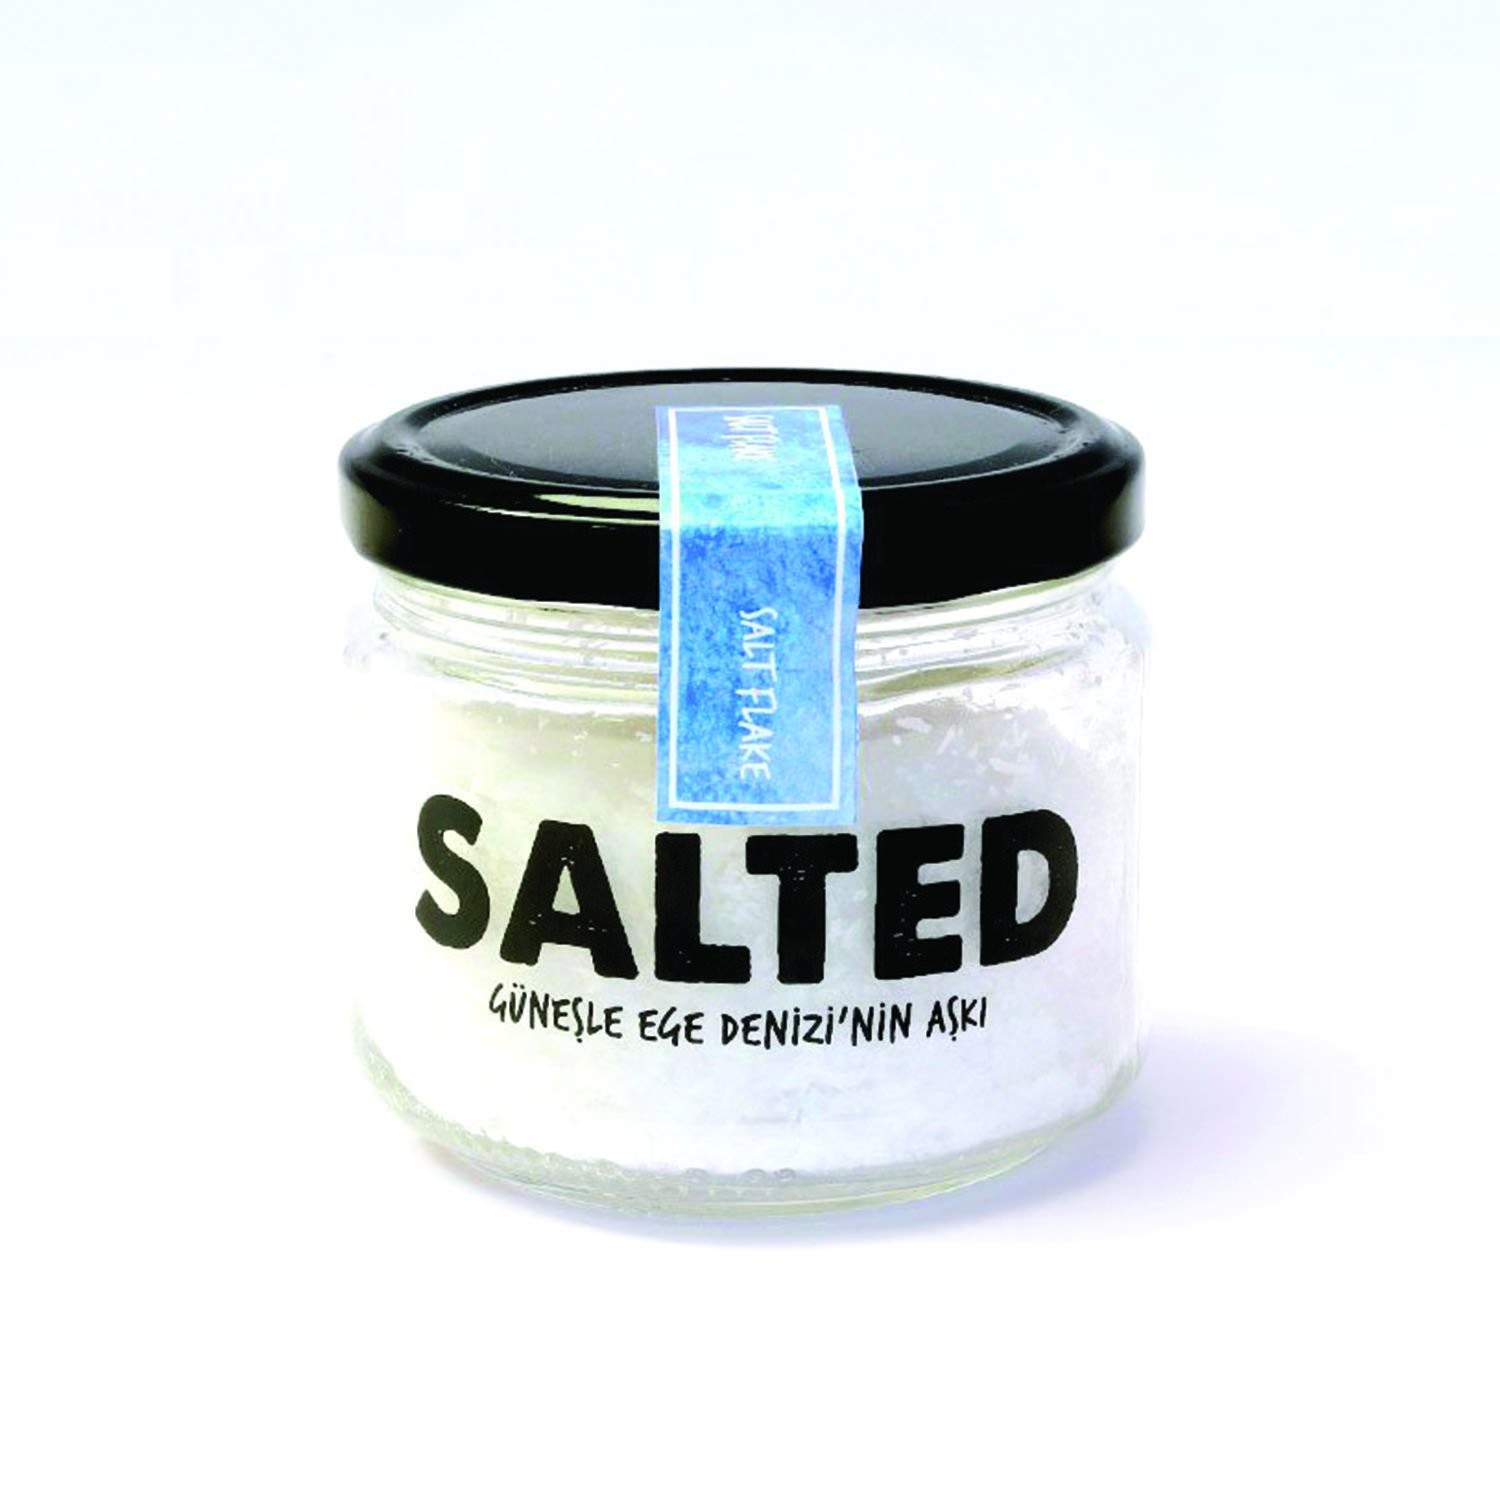 Saltflake (Yaprak tuz)